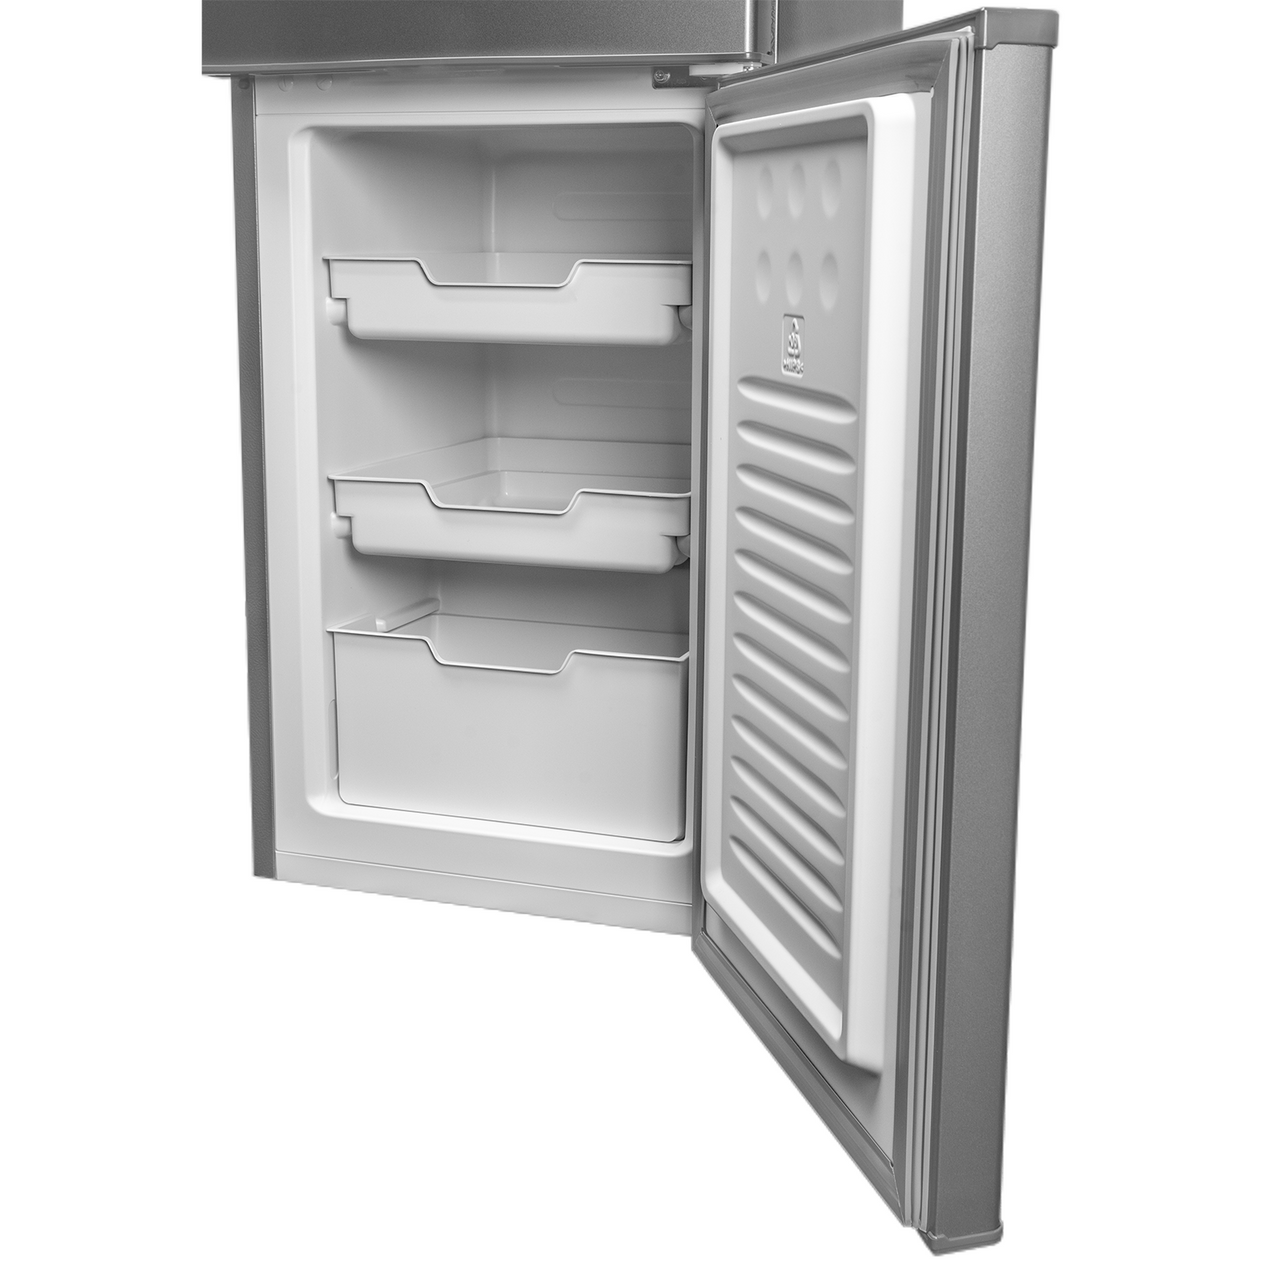 SIA Freestanding white combi fridge freezer 182L capacity, 3